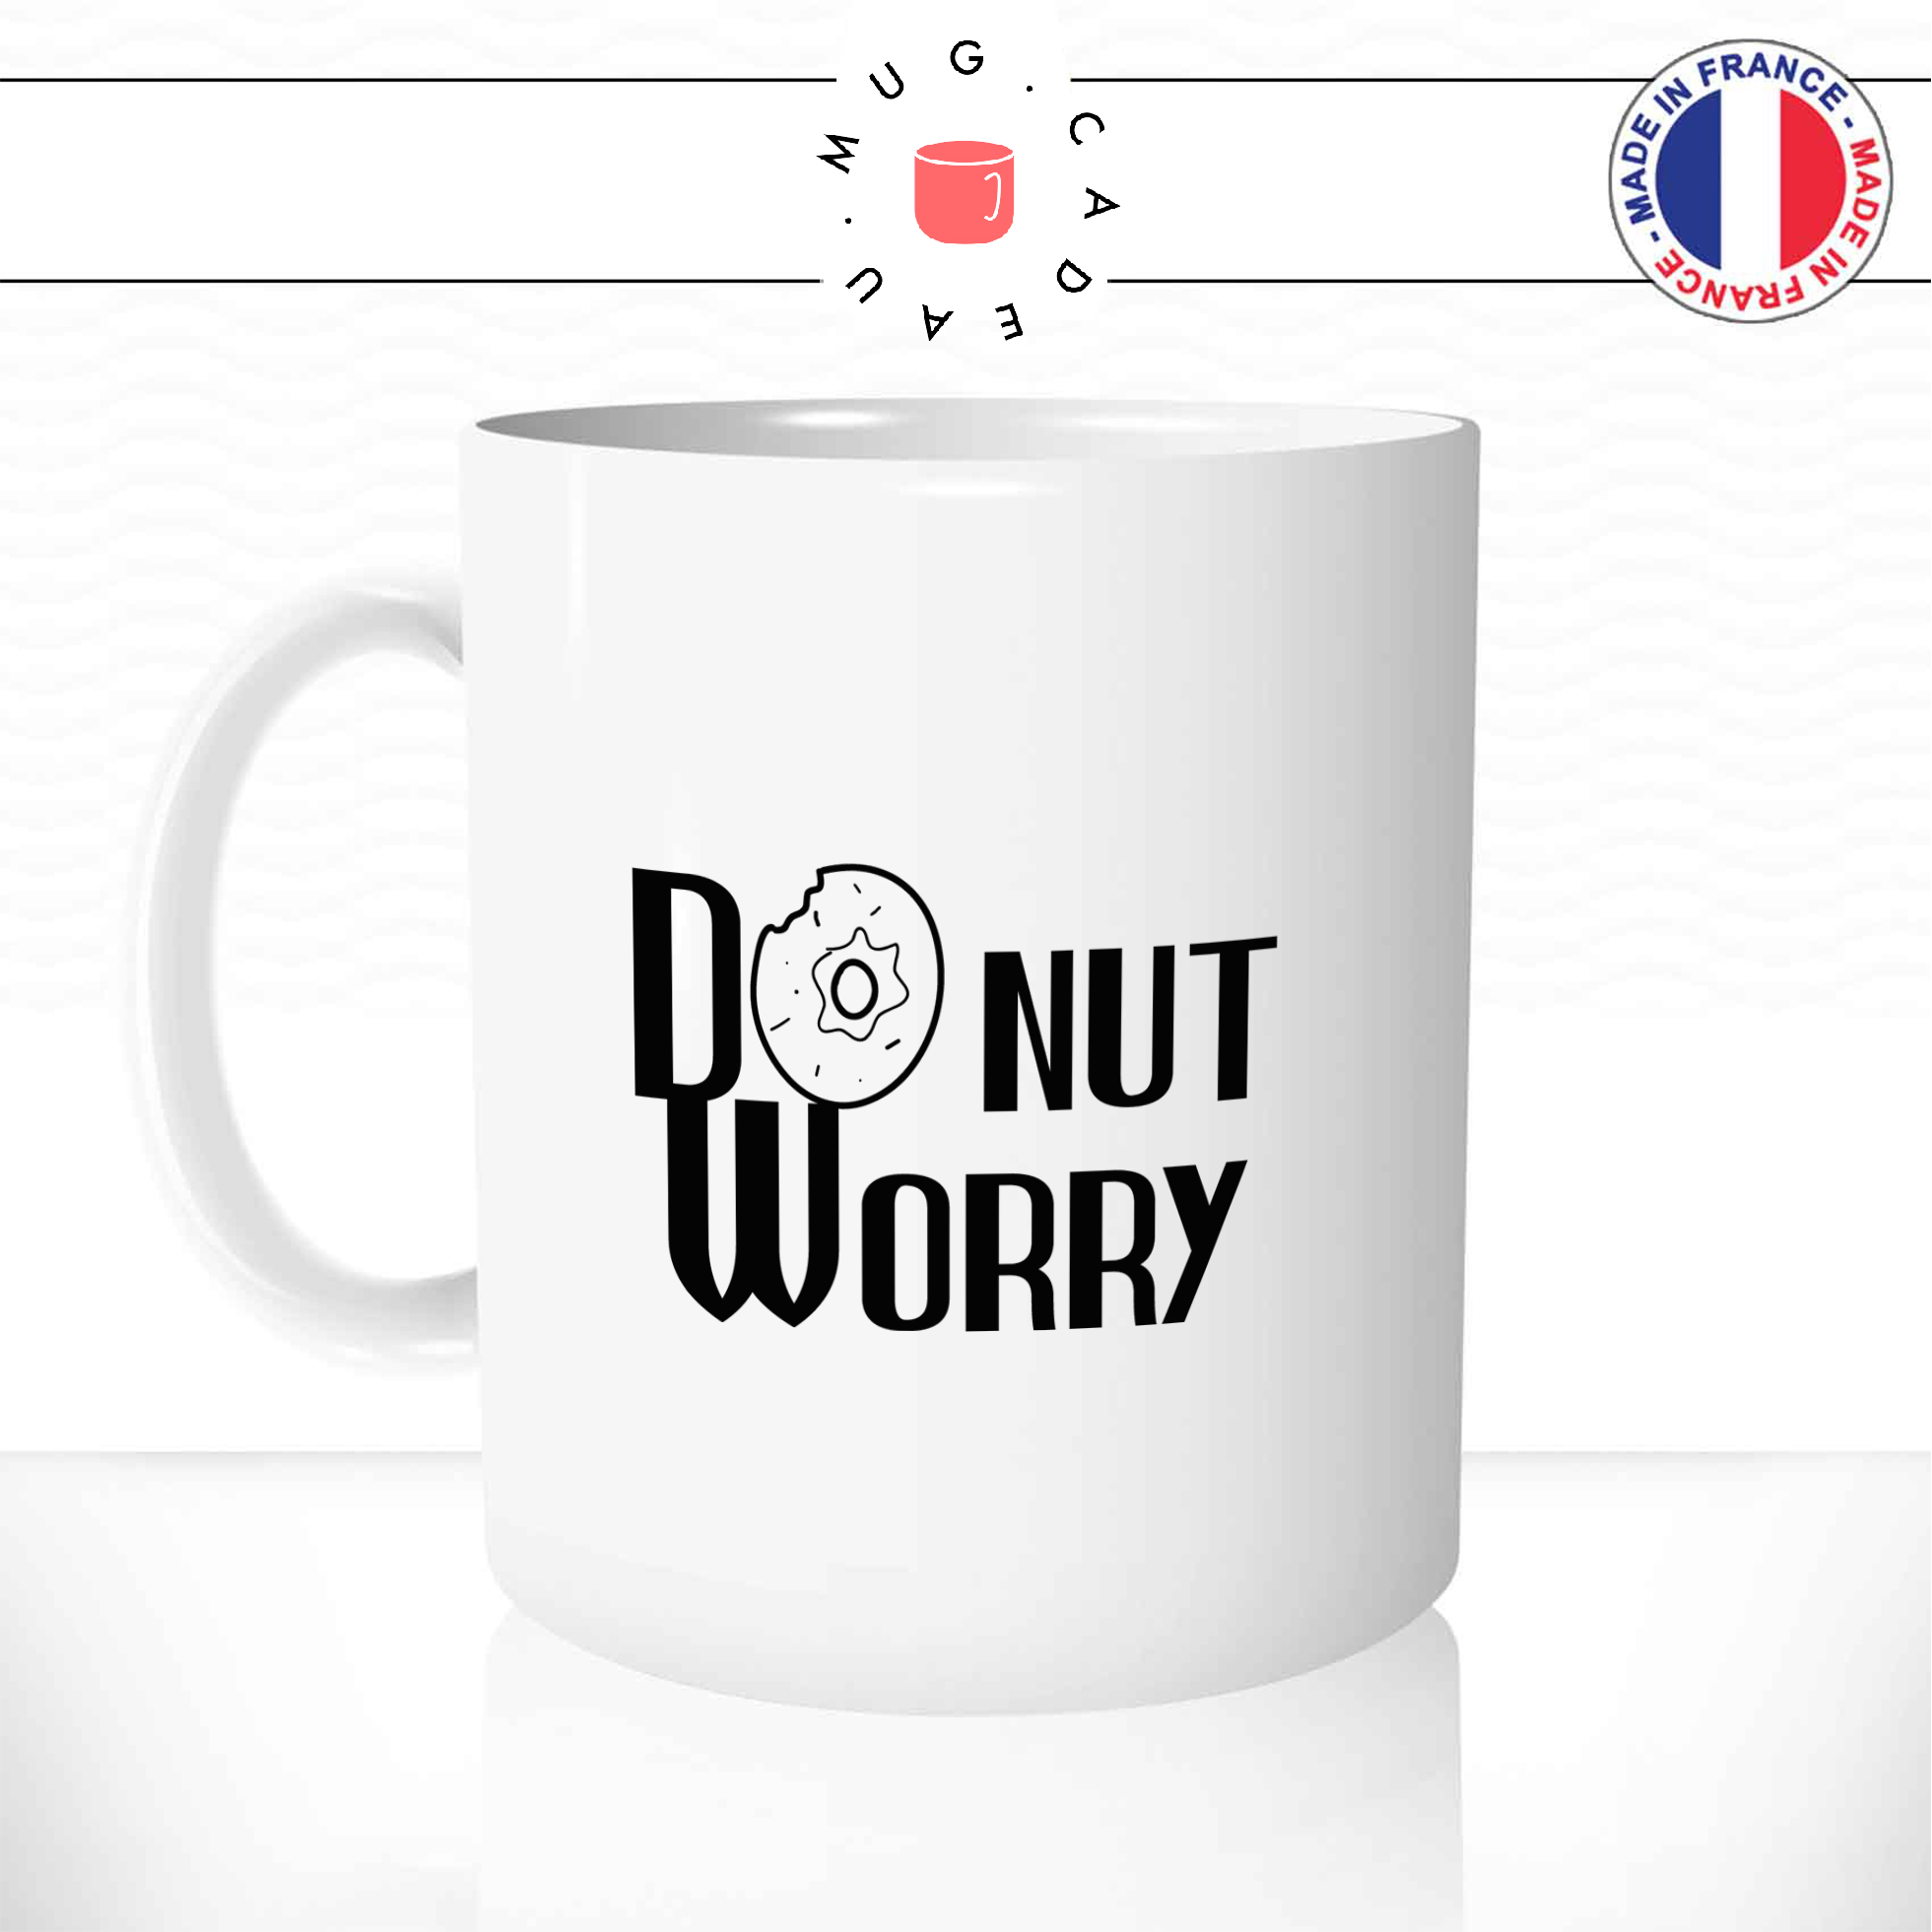 mug-tasse-ref9-citation-food-donut-worry-cafe-the-mugs-tasses-personnalise-anse-gauche